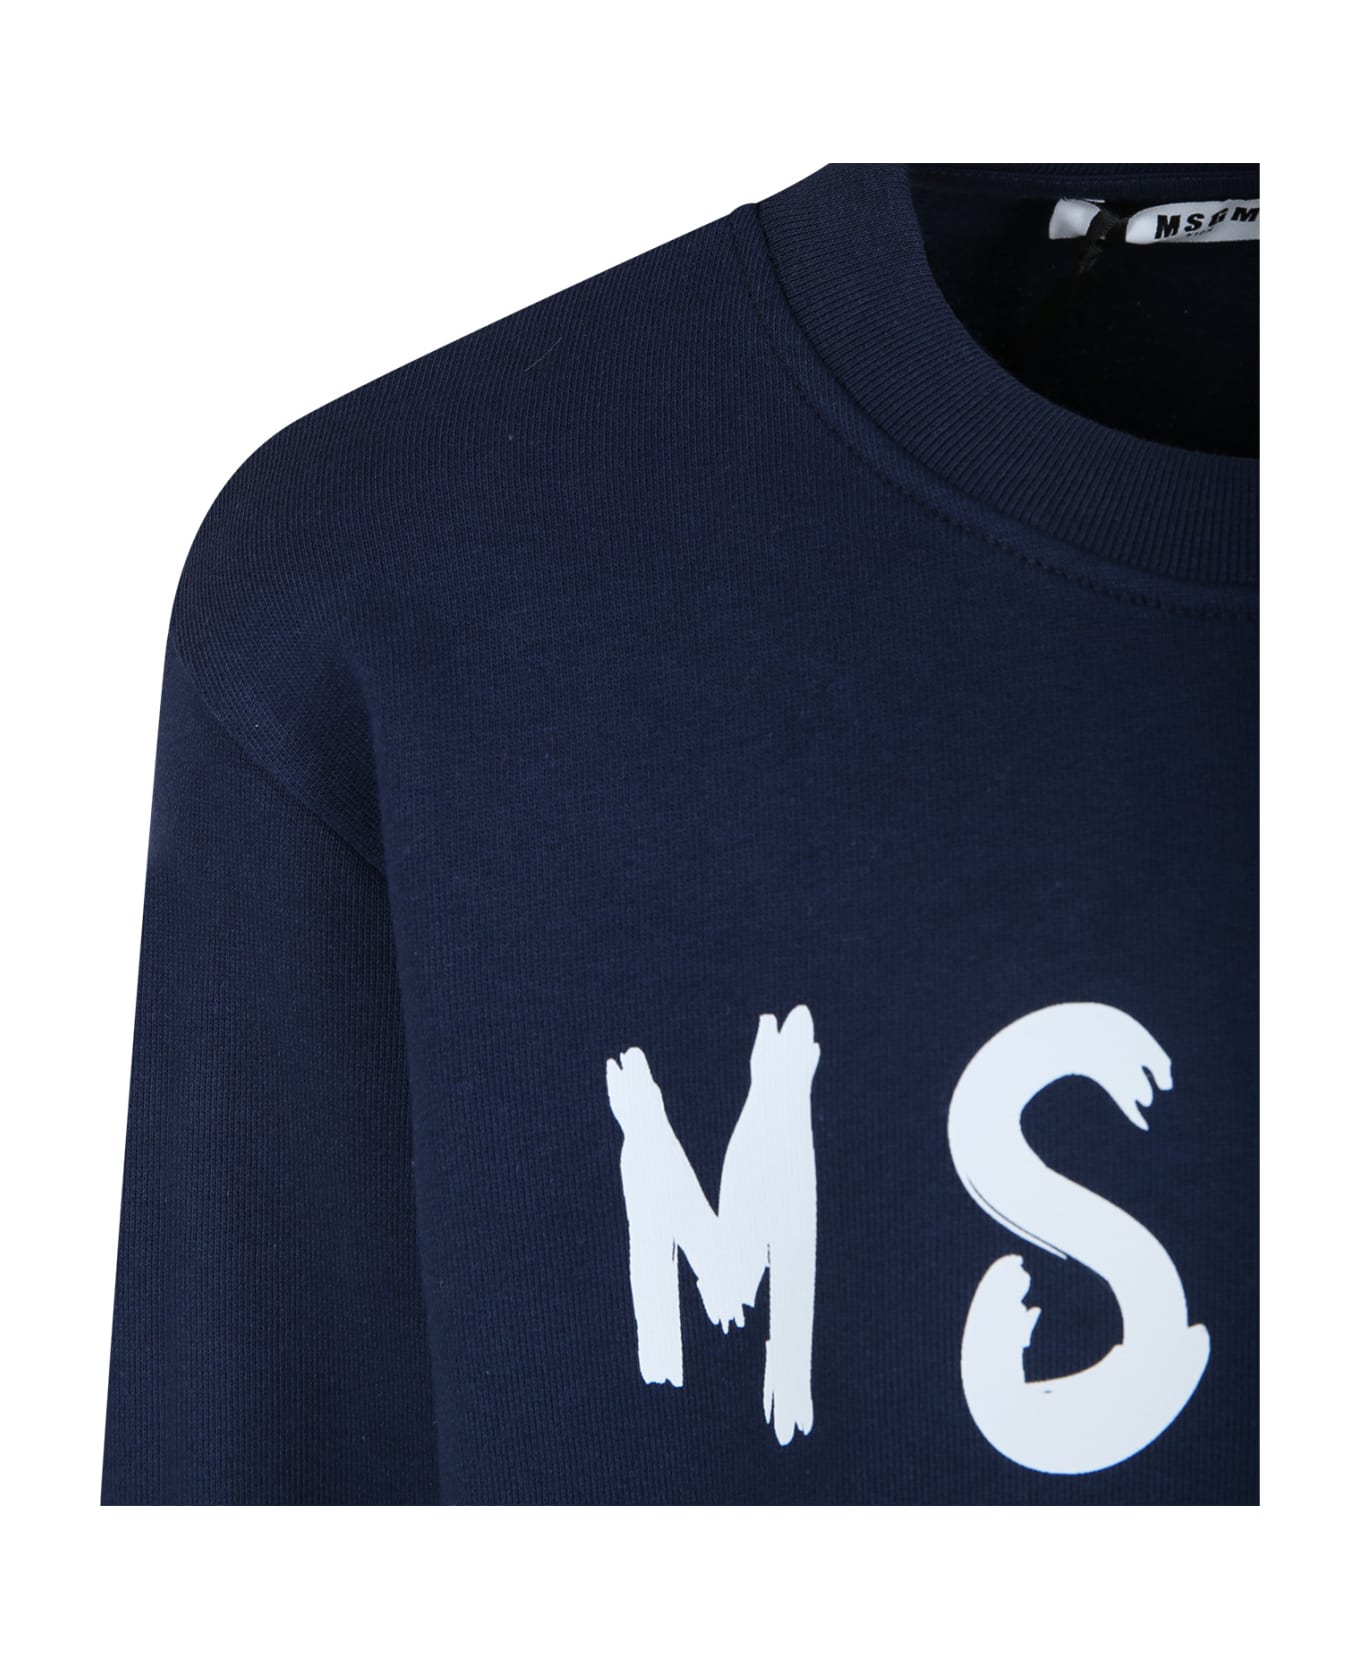 MSGM Blue Sweatshirt For Kids With Logo - Blu